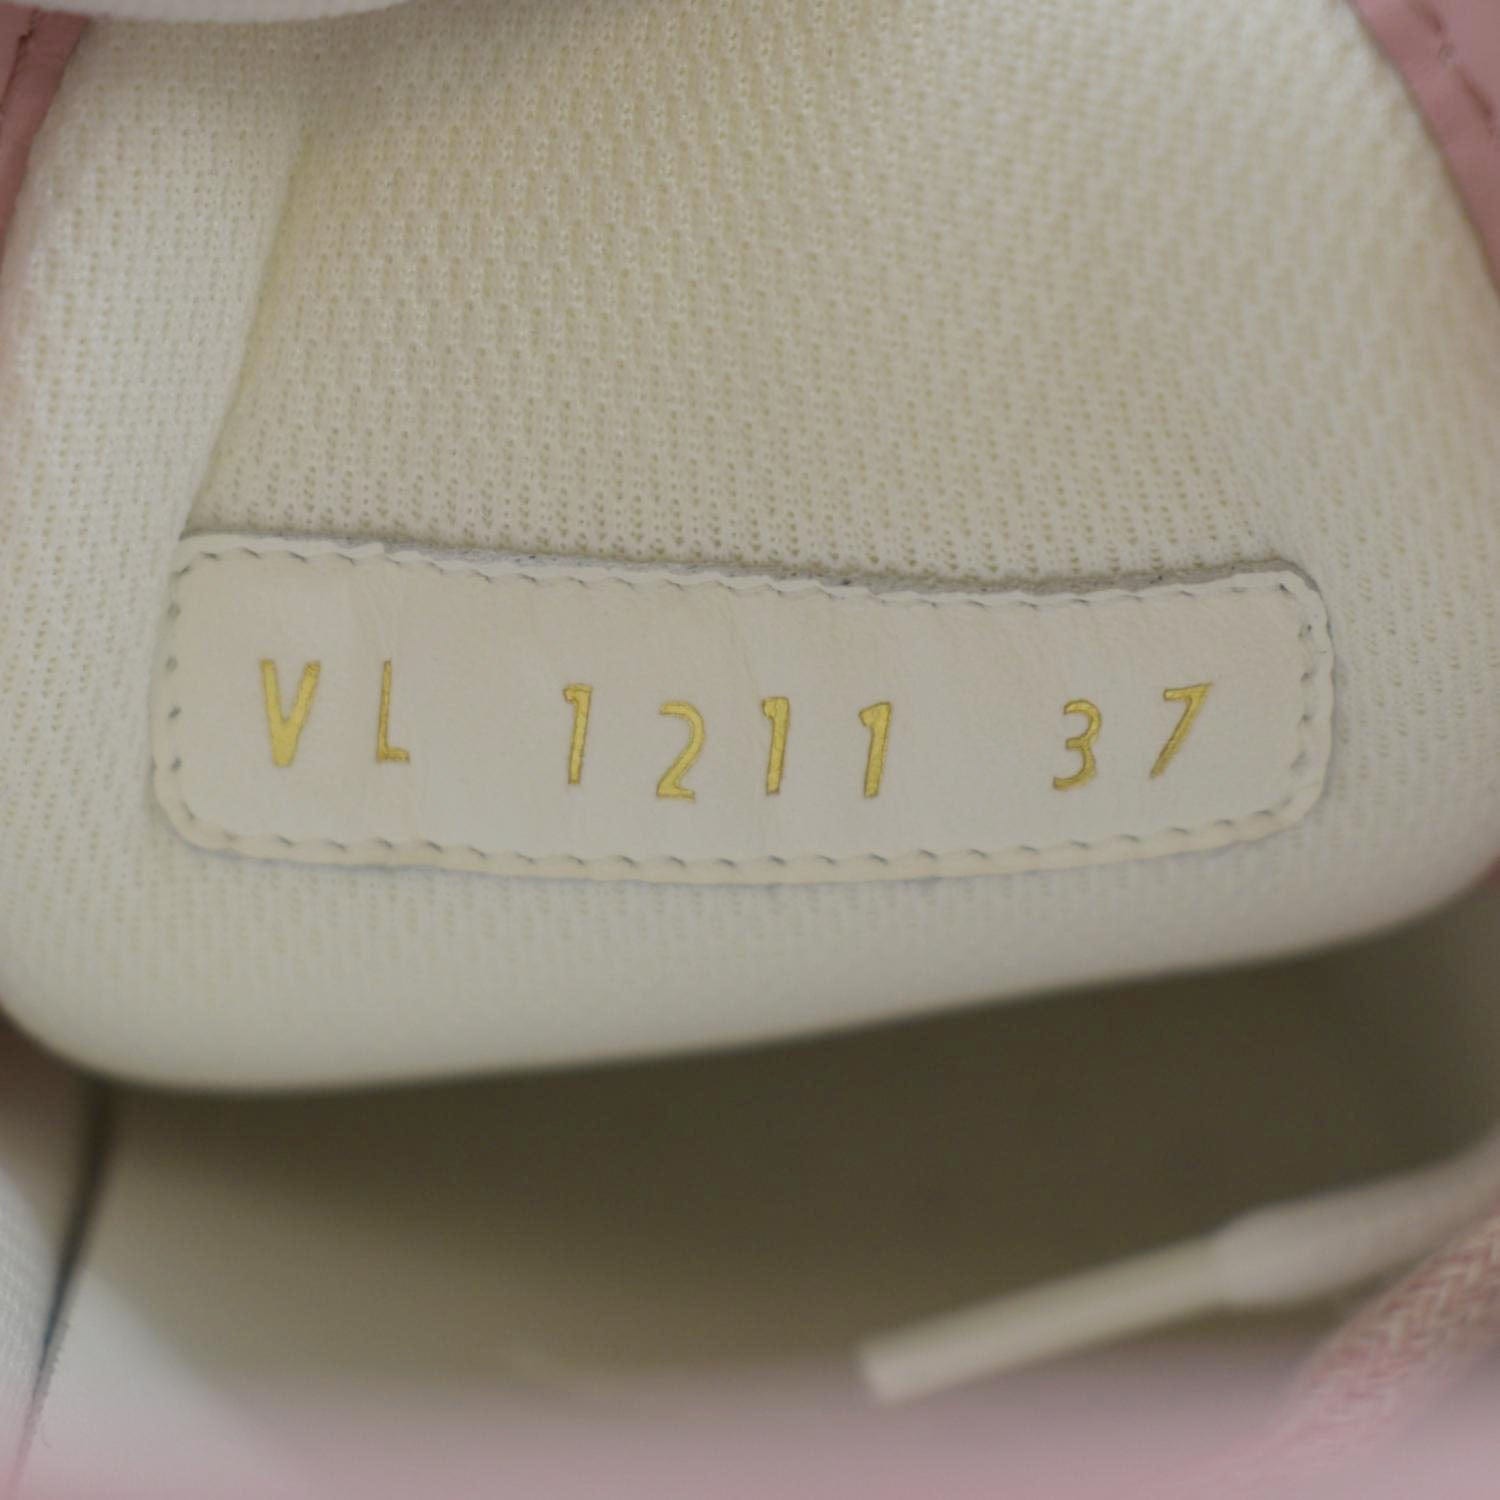 LOUIS VUITTON Denim Monogram Squad Sneakers 38 Pink 1253135